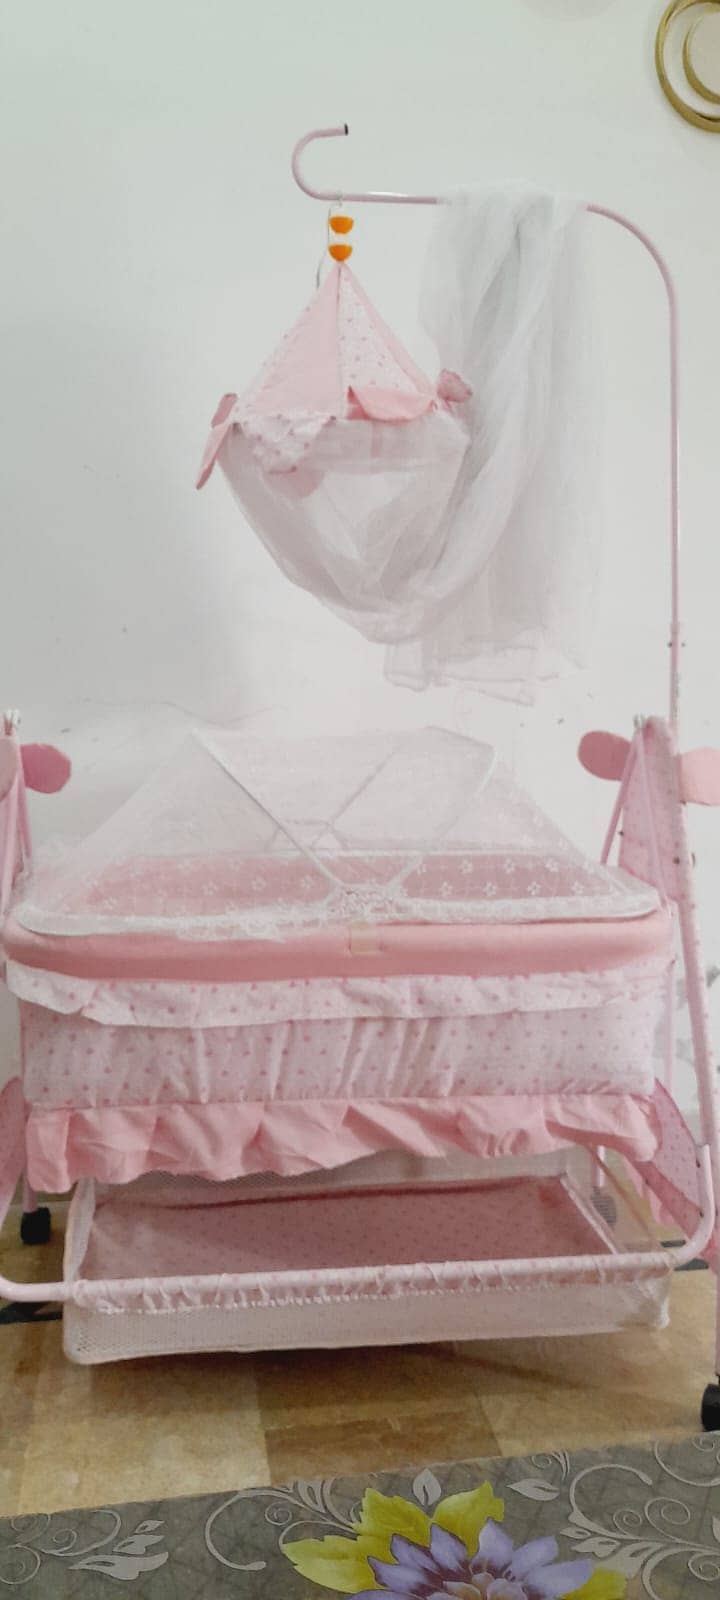 Baby cot / Baby beds / Kid baby cot / Kids furniture 0